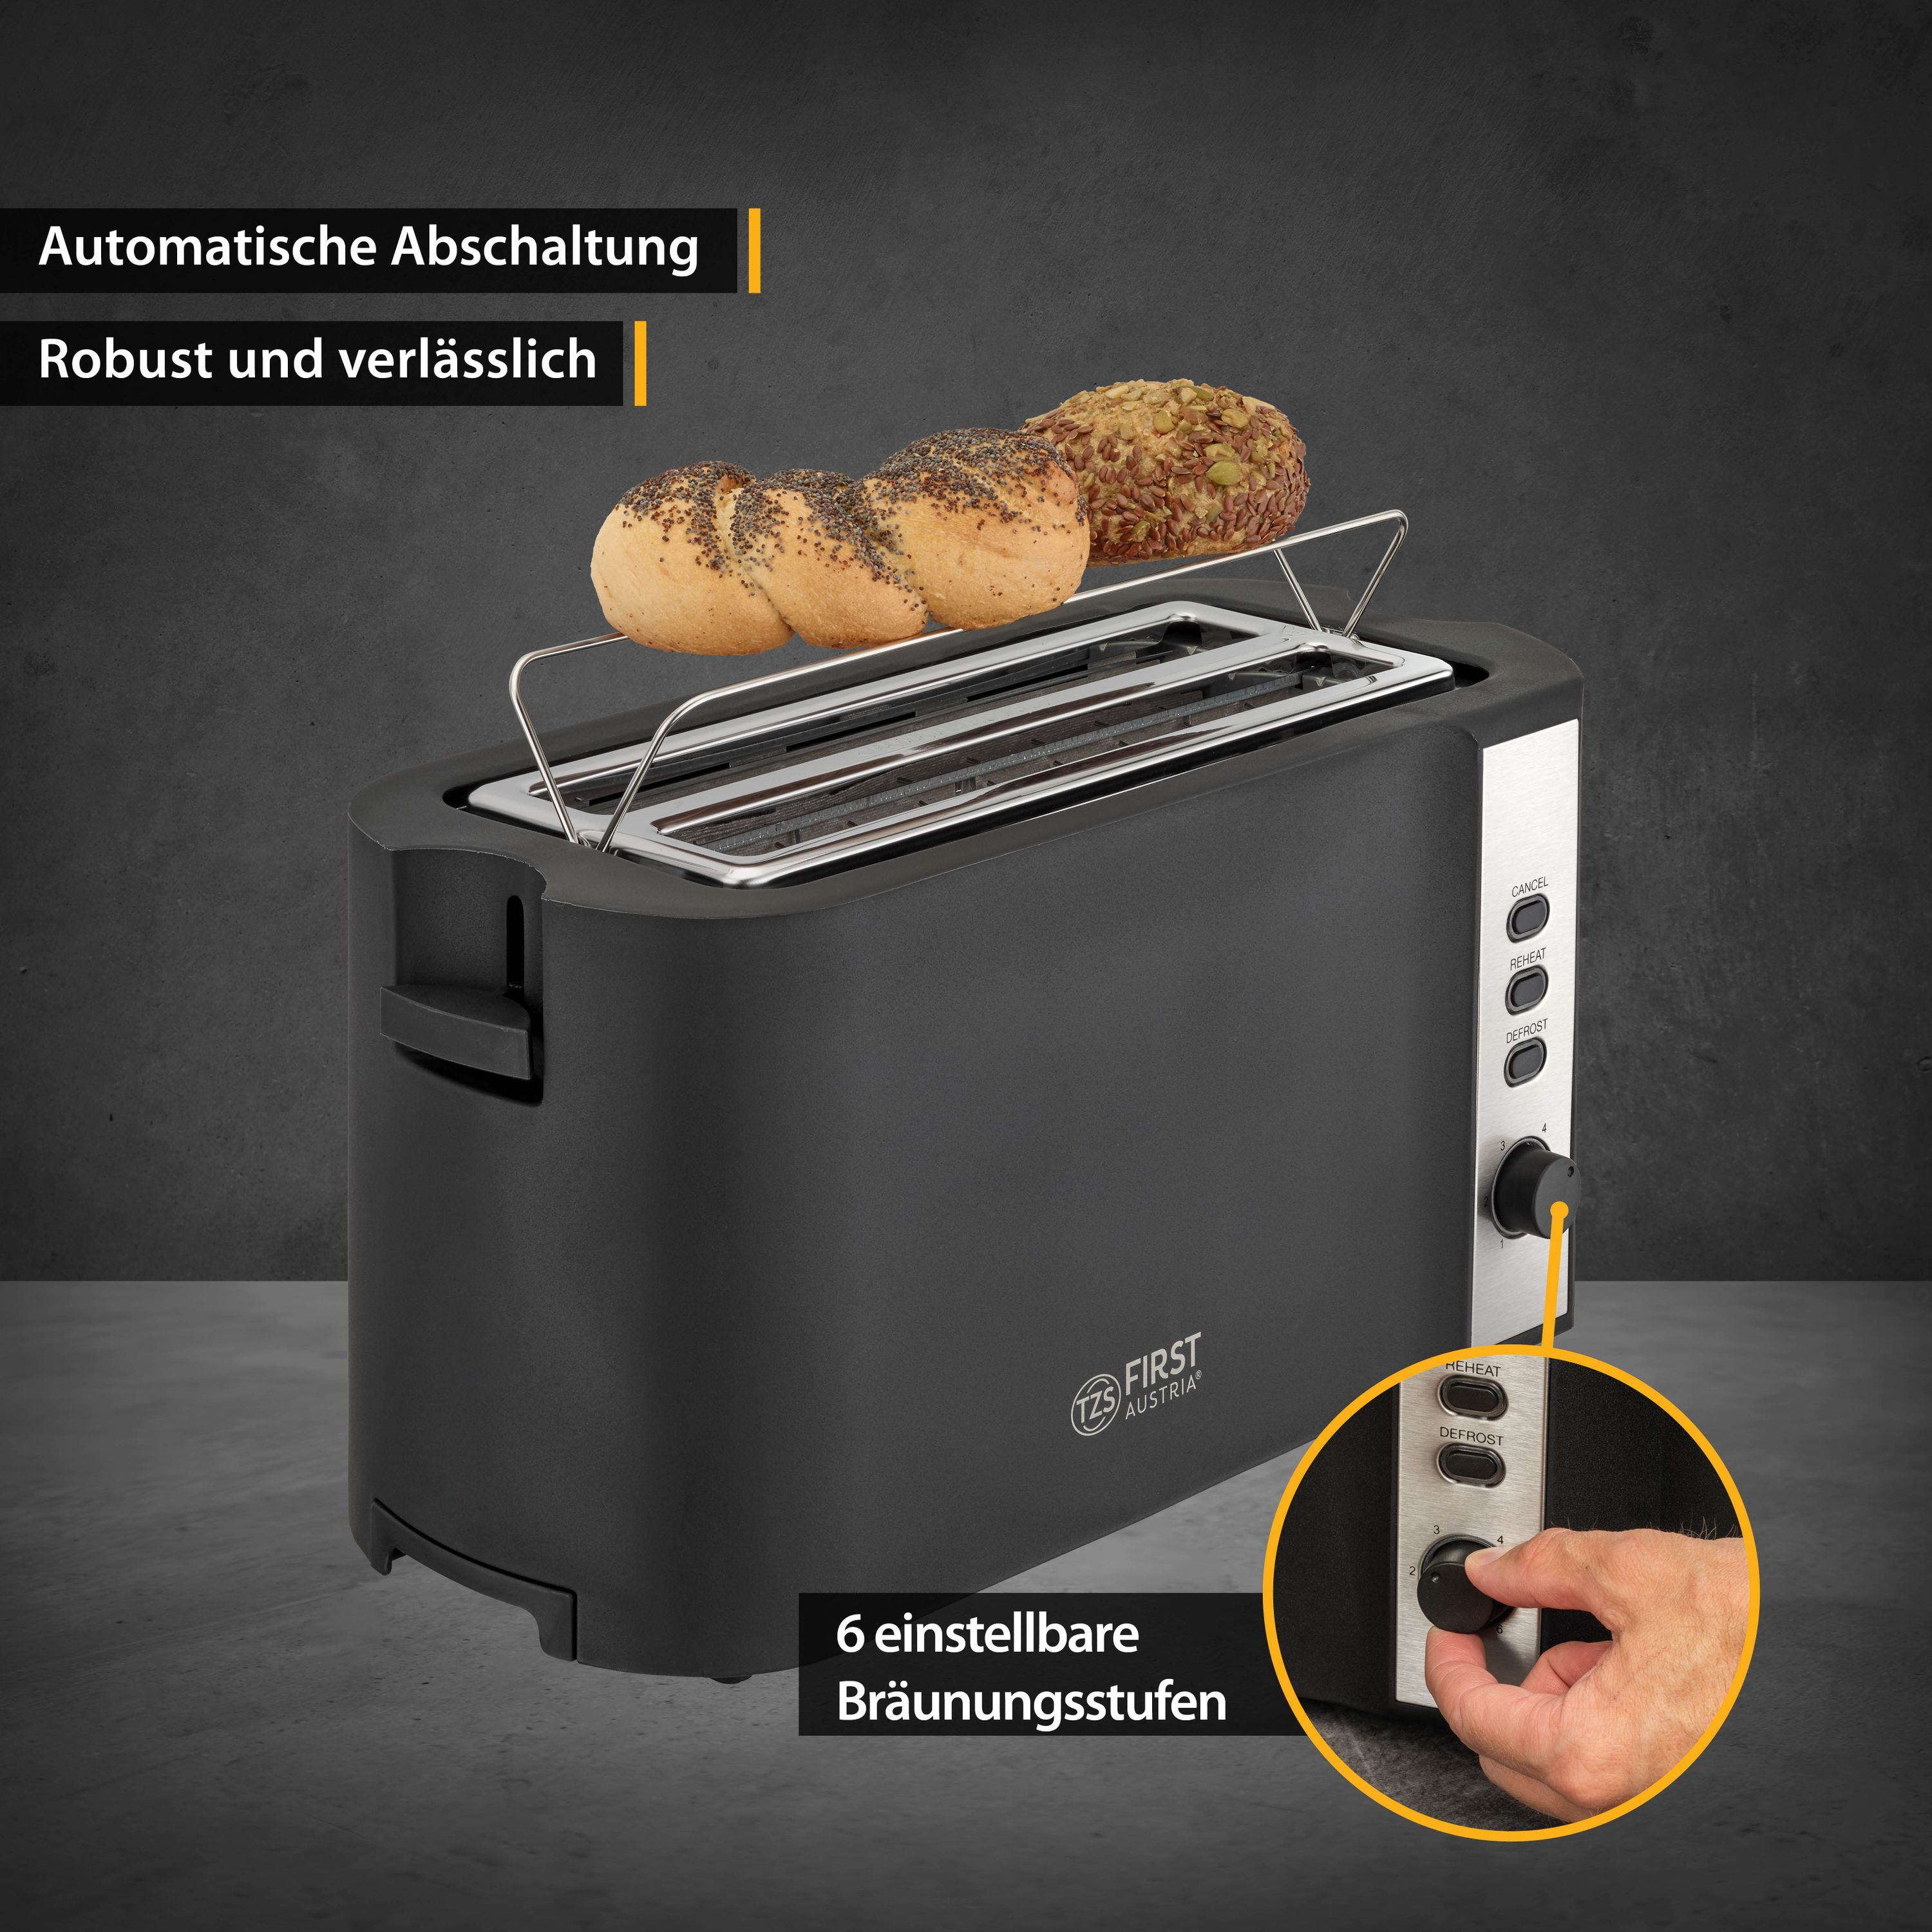 4) FA-5366-1 Toaster Watt, FIRST AUSTRIA Schwarz TZS Schlitze: (1500